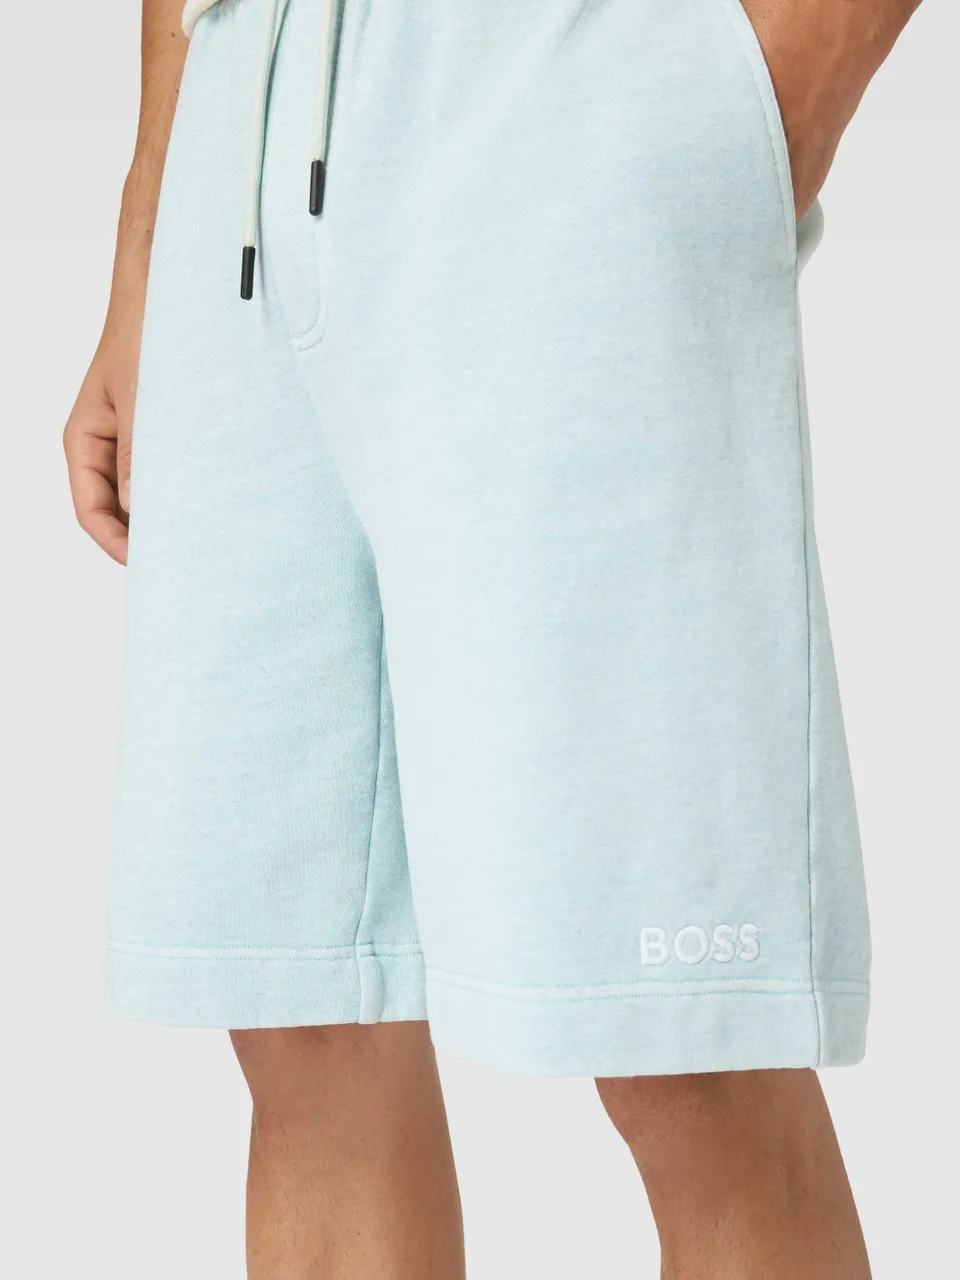 Shorts mit Label-Stitching Modell 'Neon'